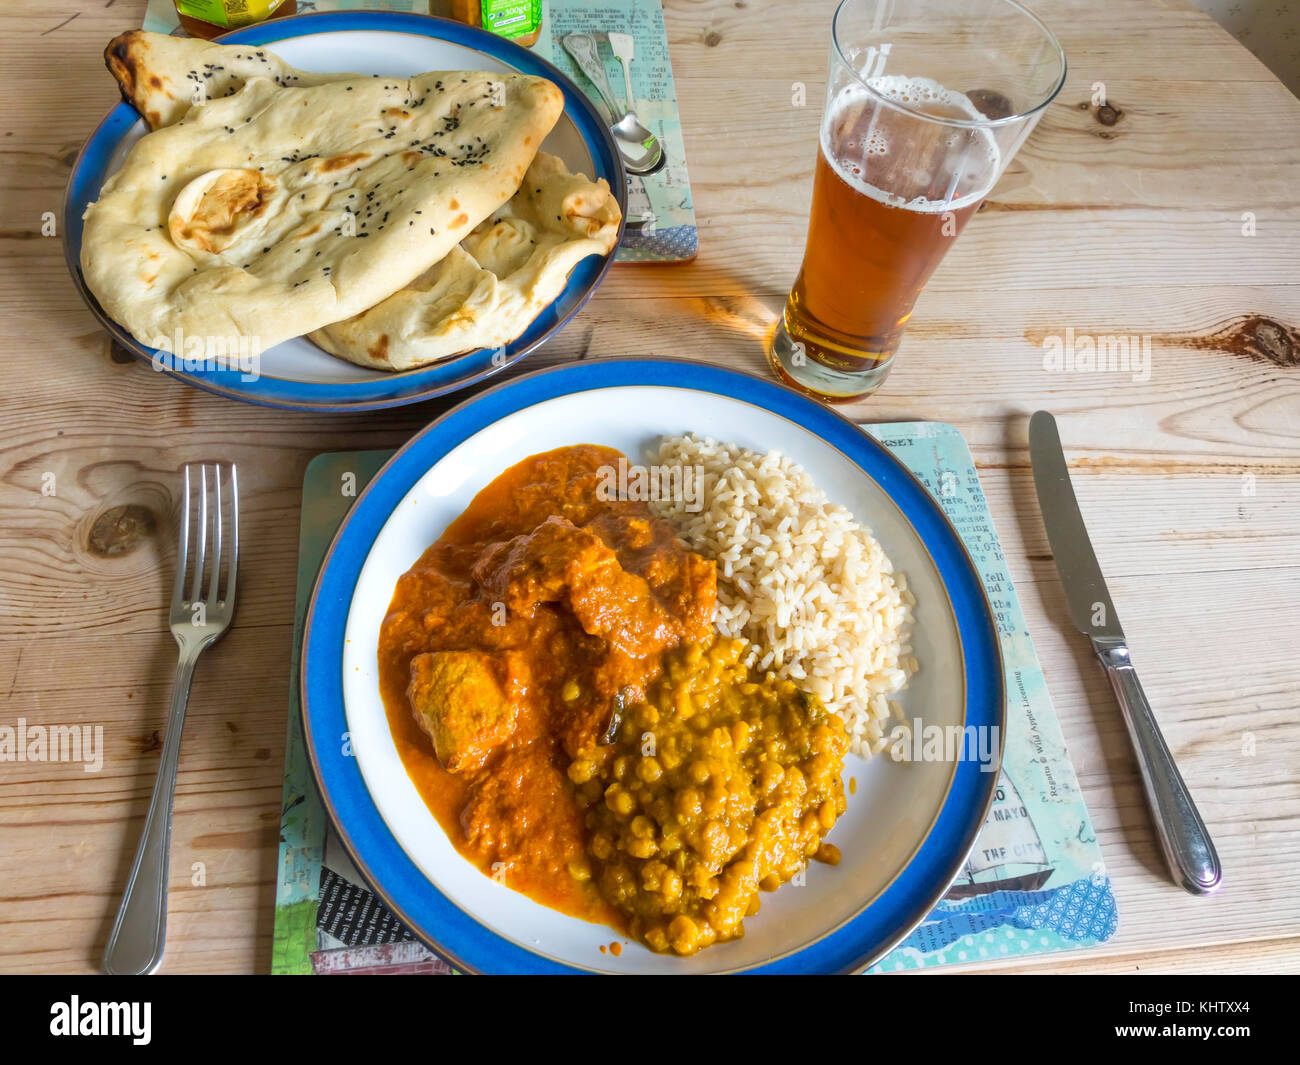 Indian Take-away food served at home Chicken Madras Curry, Tarka Dahl, Tandoori Naan, Basmati Brown Rice, Mango and Lime Chutneys and a glass of IPA Stock Photo